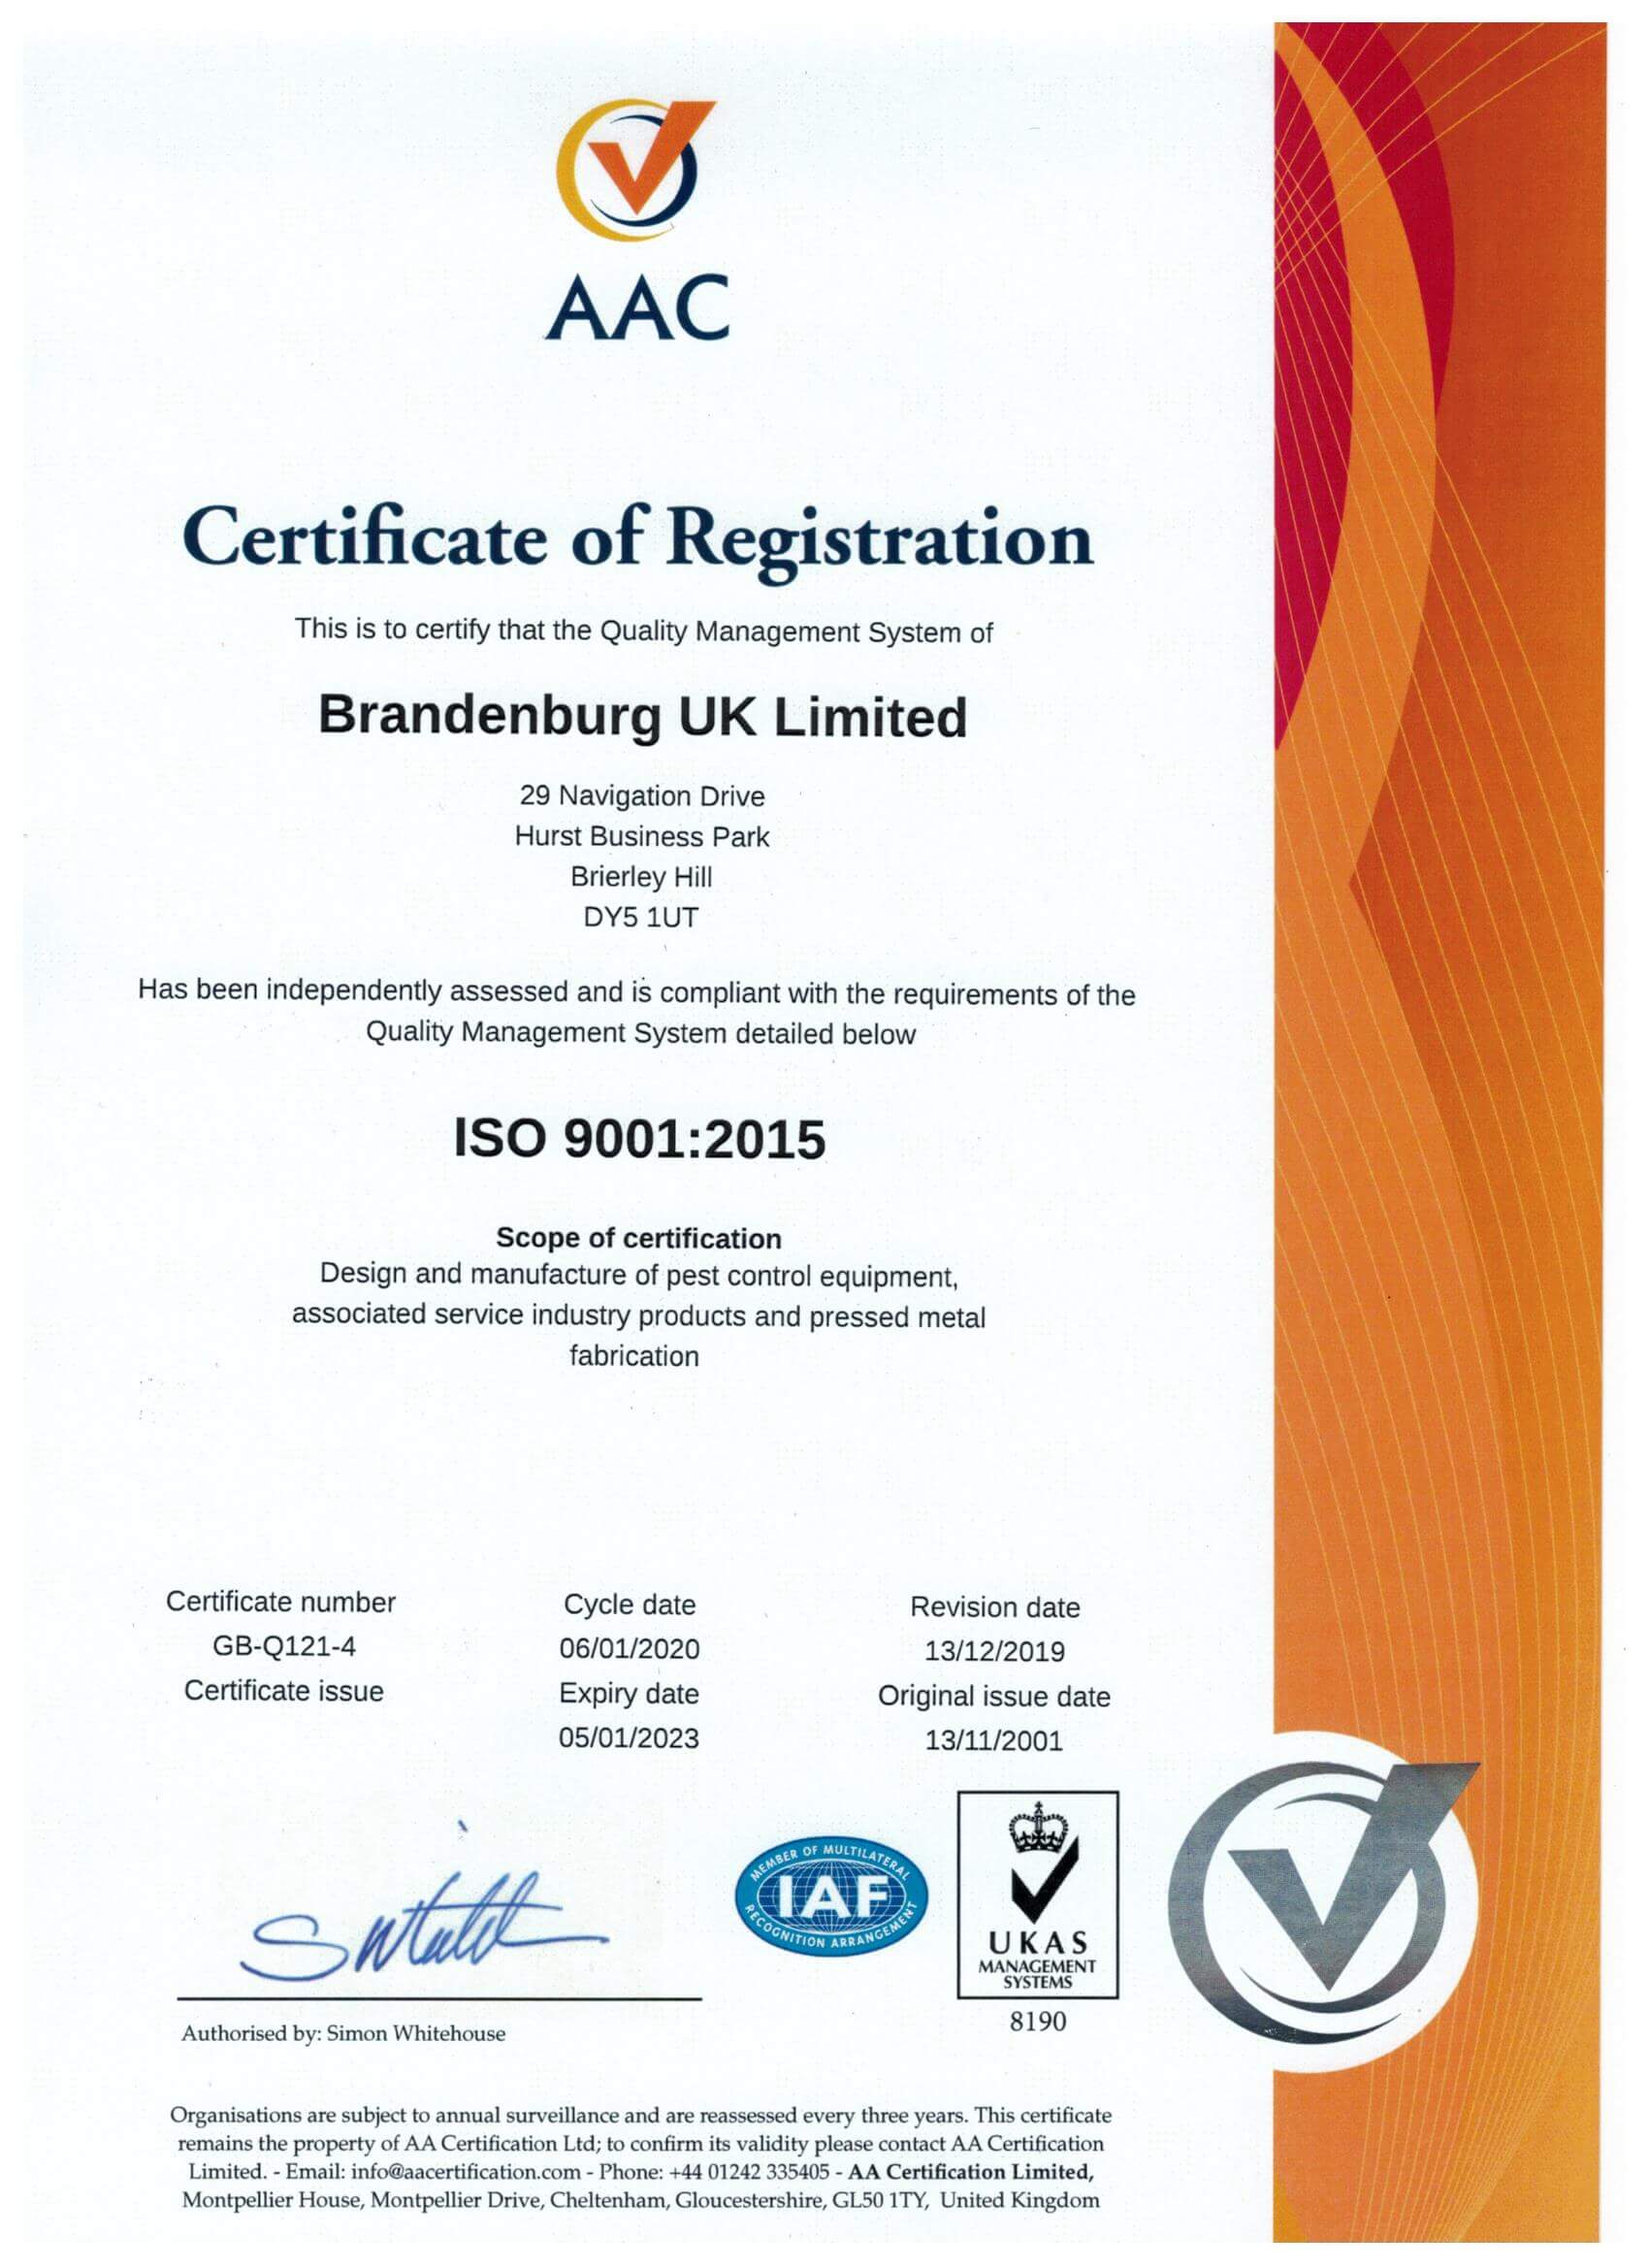 Brandenburg Certificate 2020